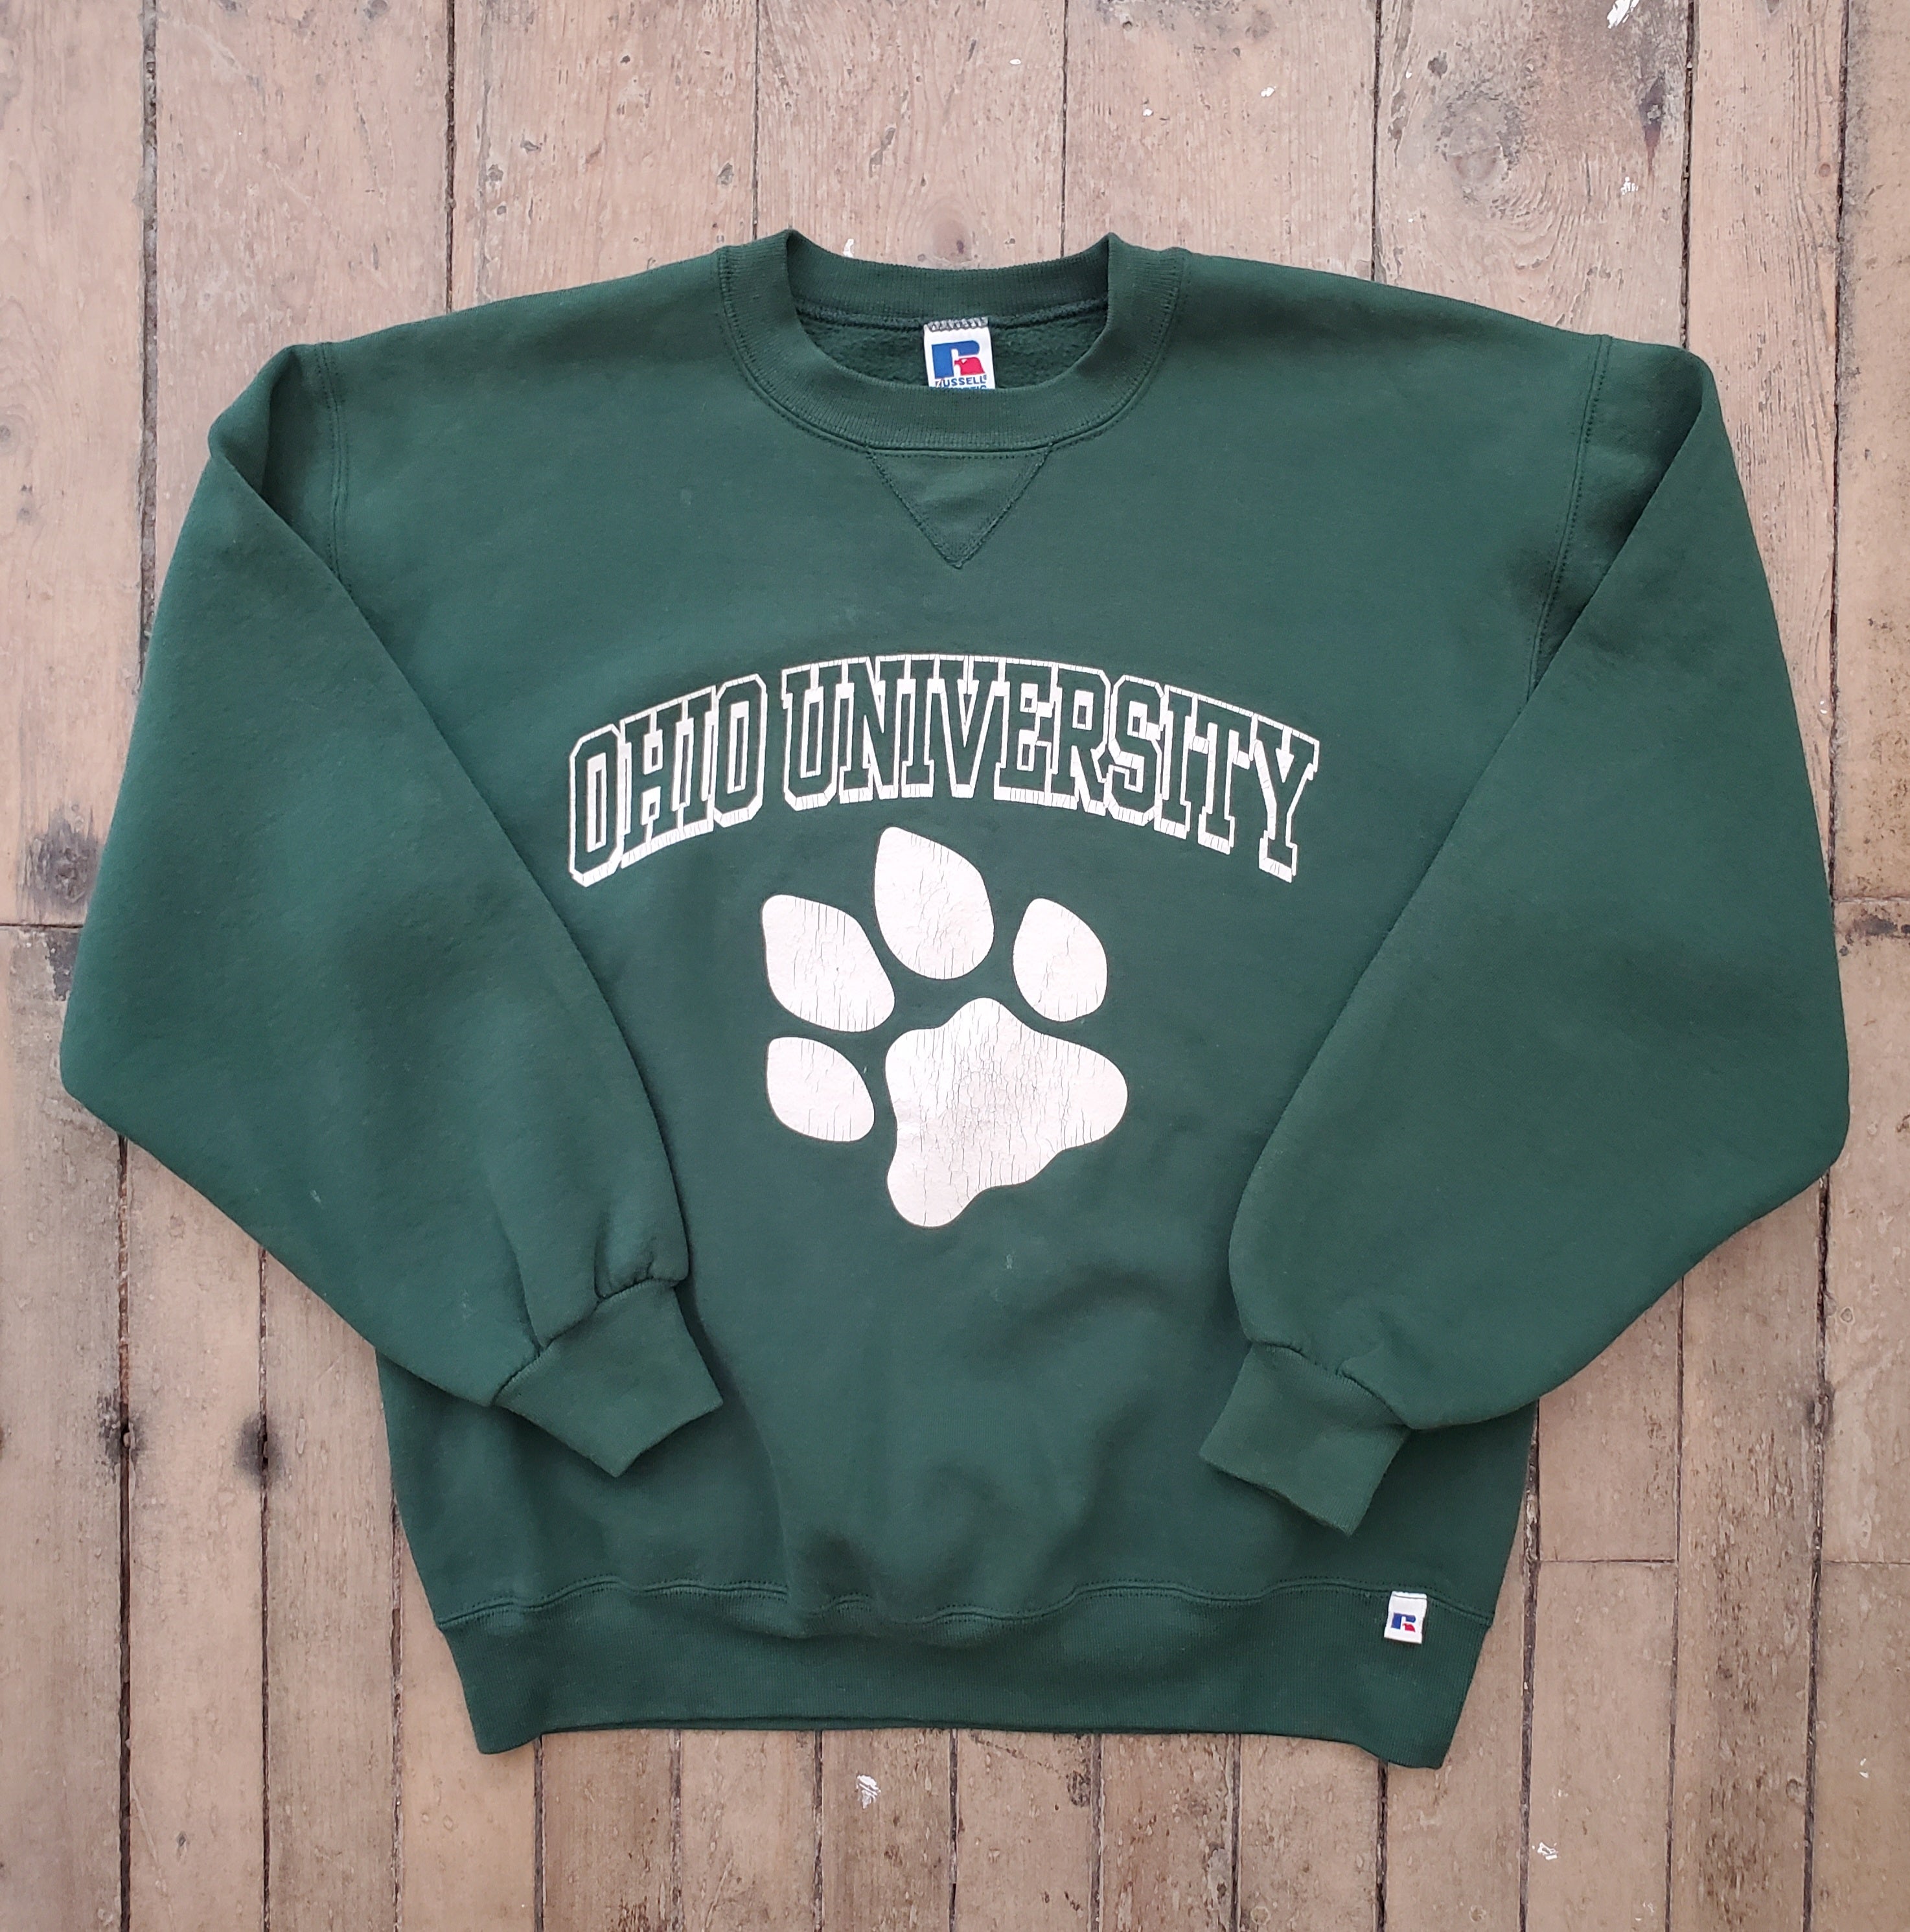 1990’s Ohio University Sweatshirt